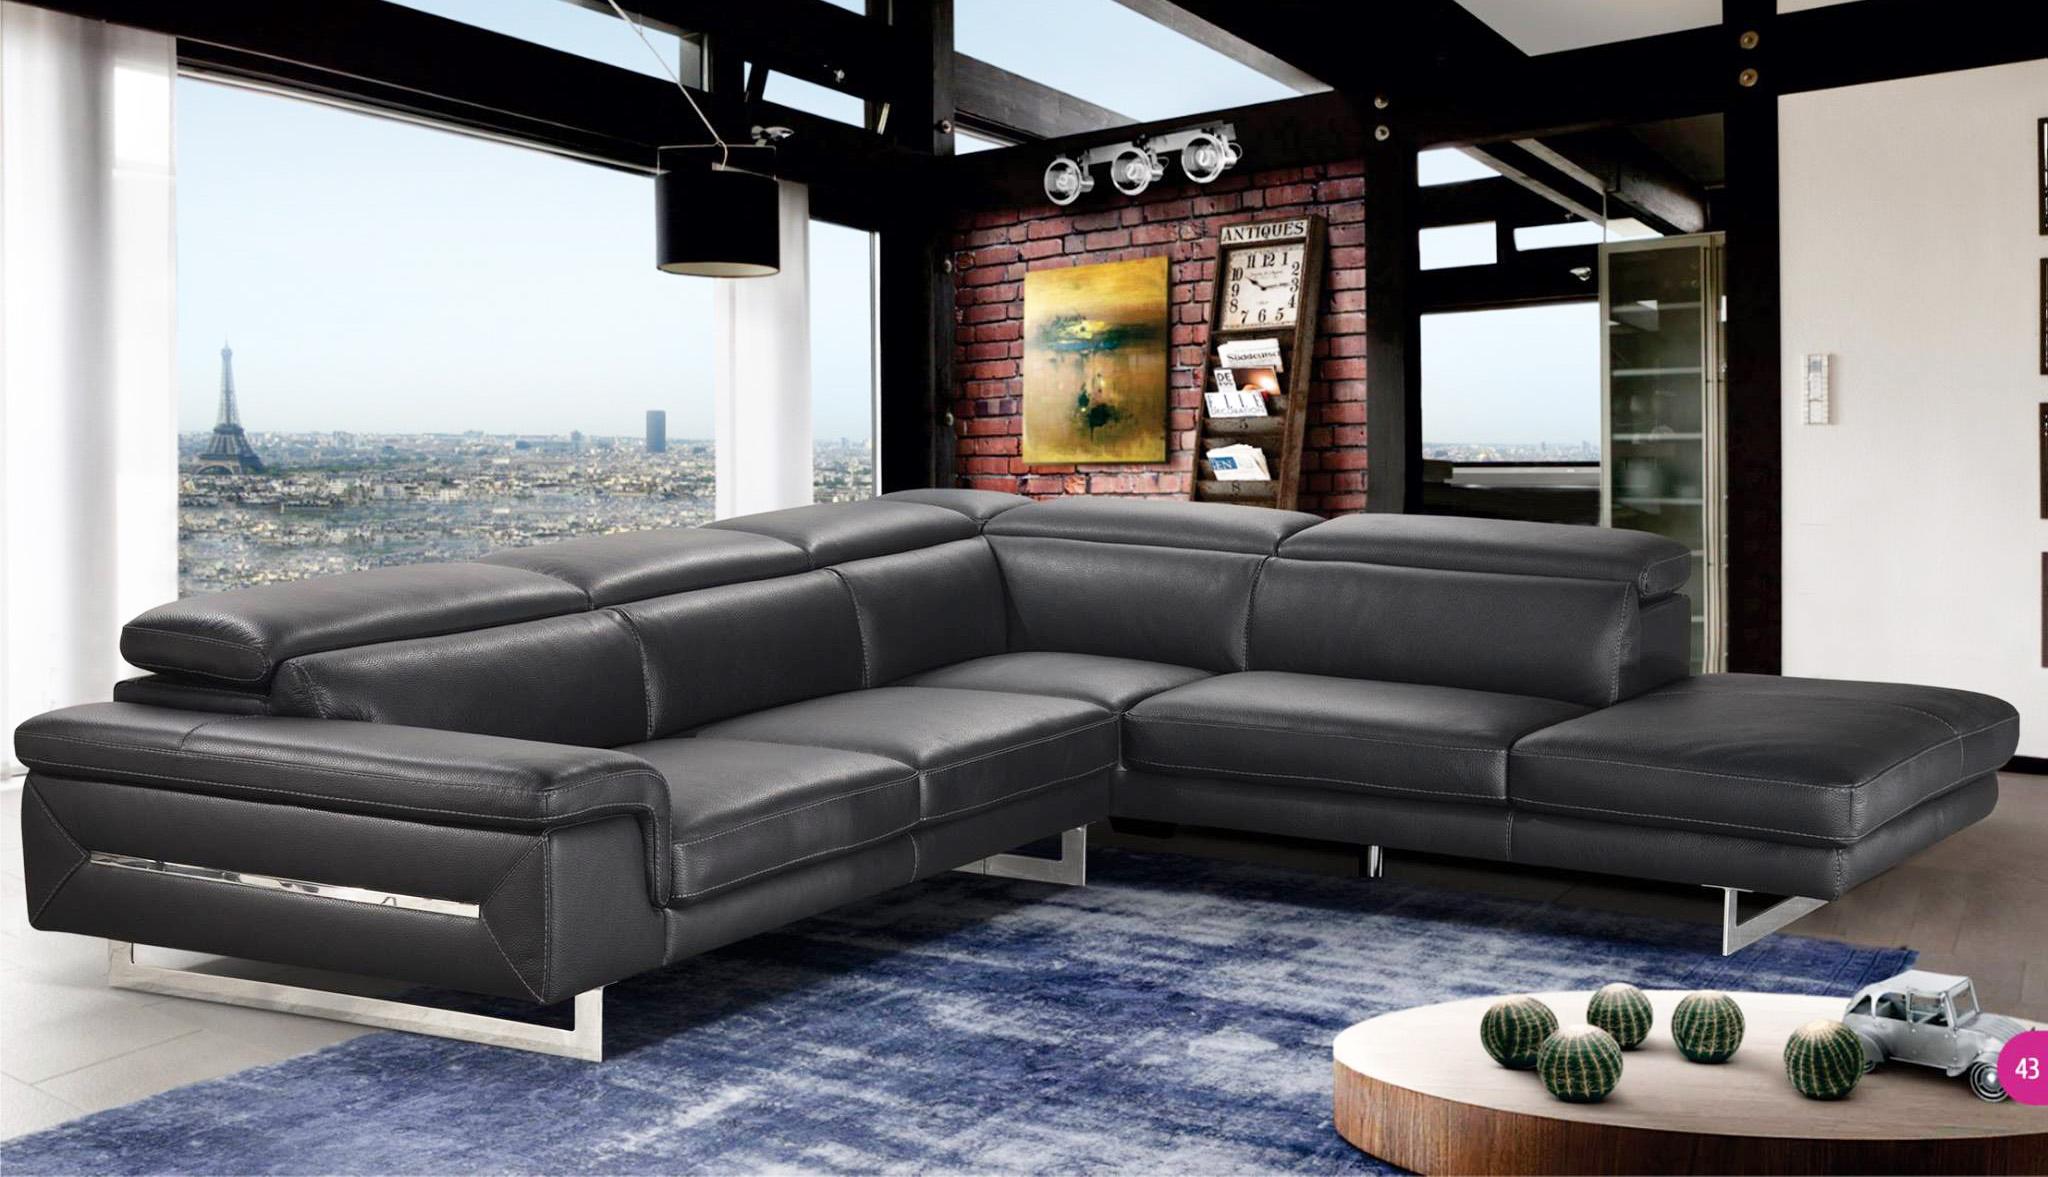 Contemporary, Modern Sectional Sofa Accenti Italia Lazio VGDDVELVET in Black Italian Leather